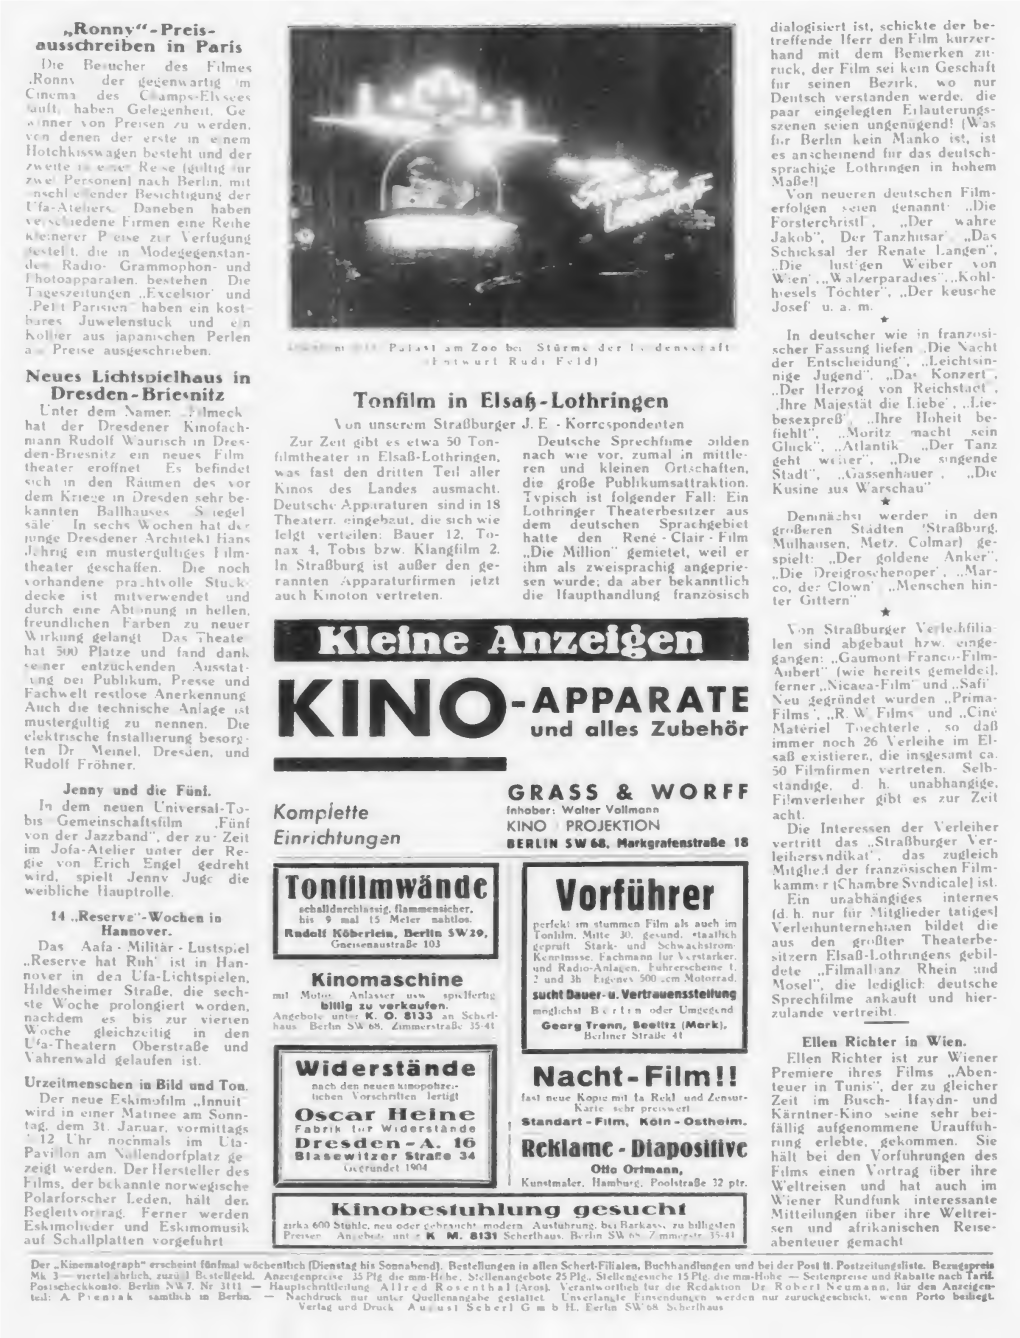 Der Kinematograph (February 1932)